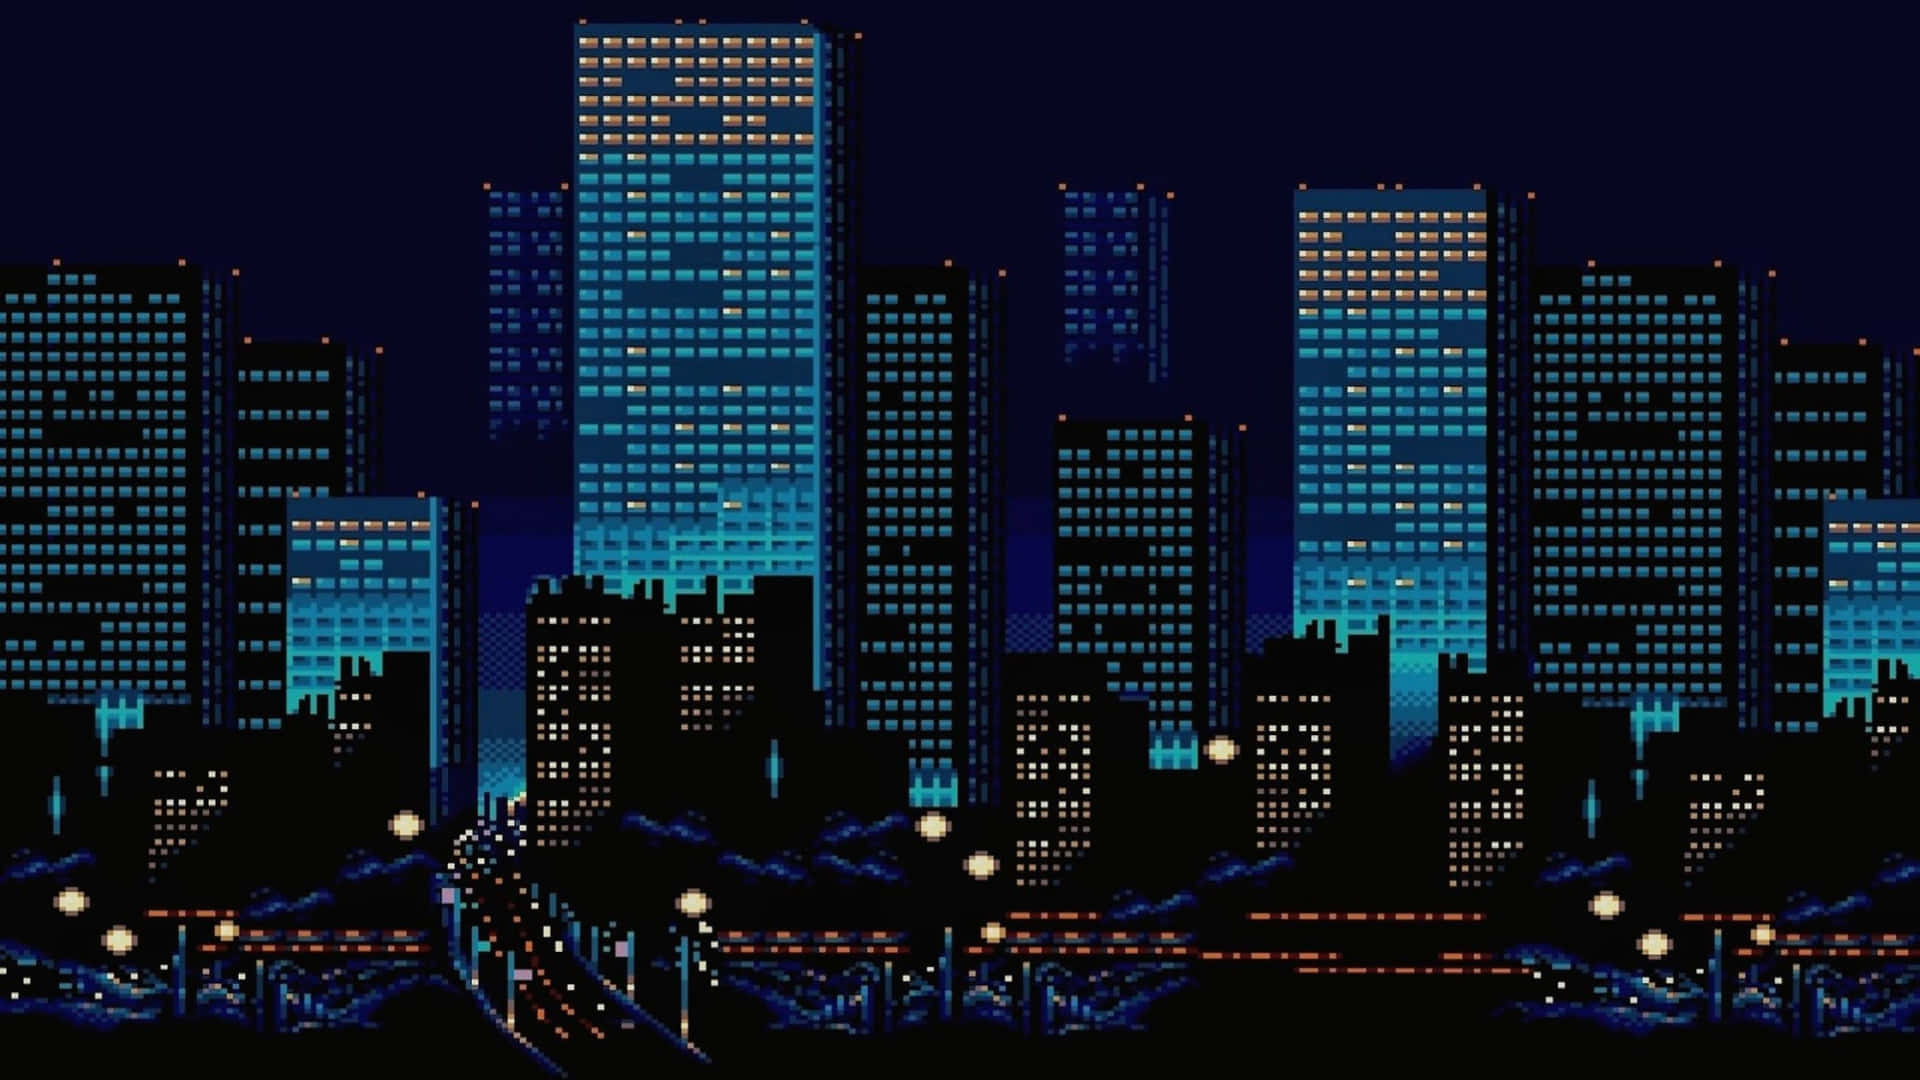 2048x1152 Aesthetic Pixel Night City Wallpaper